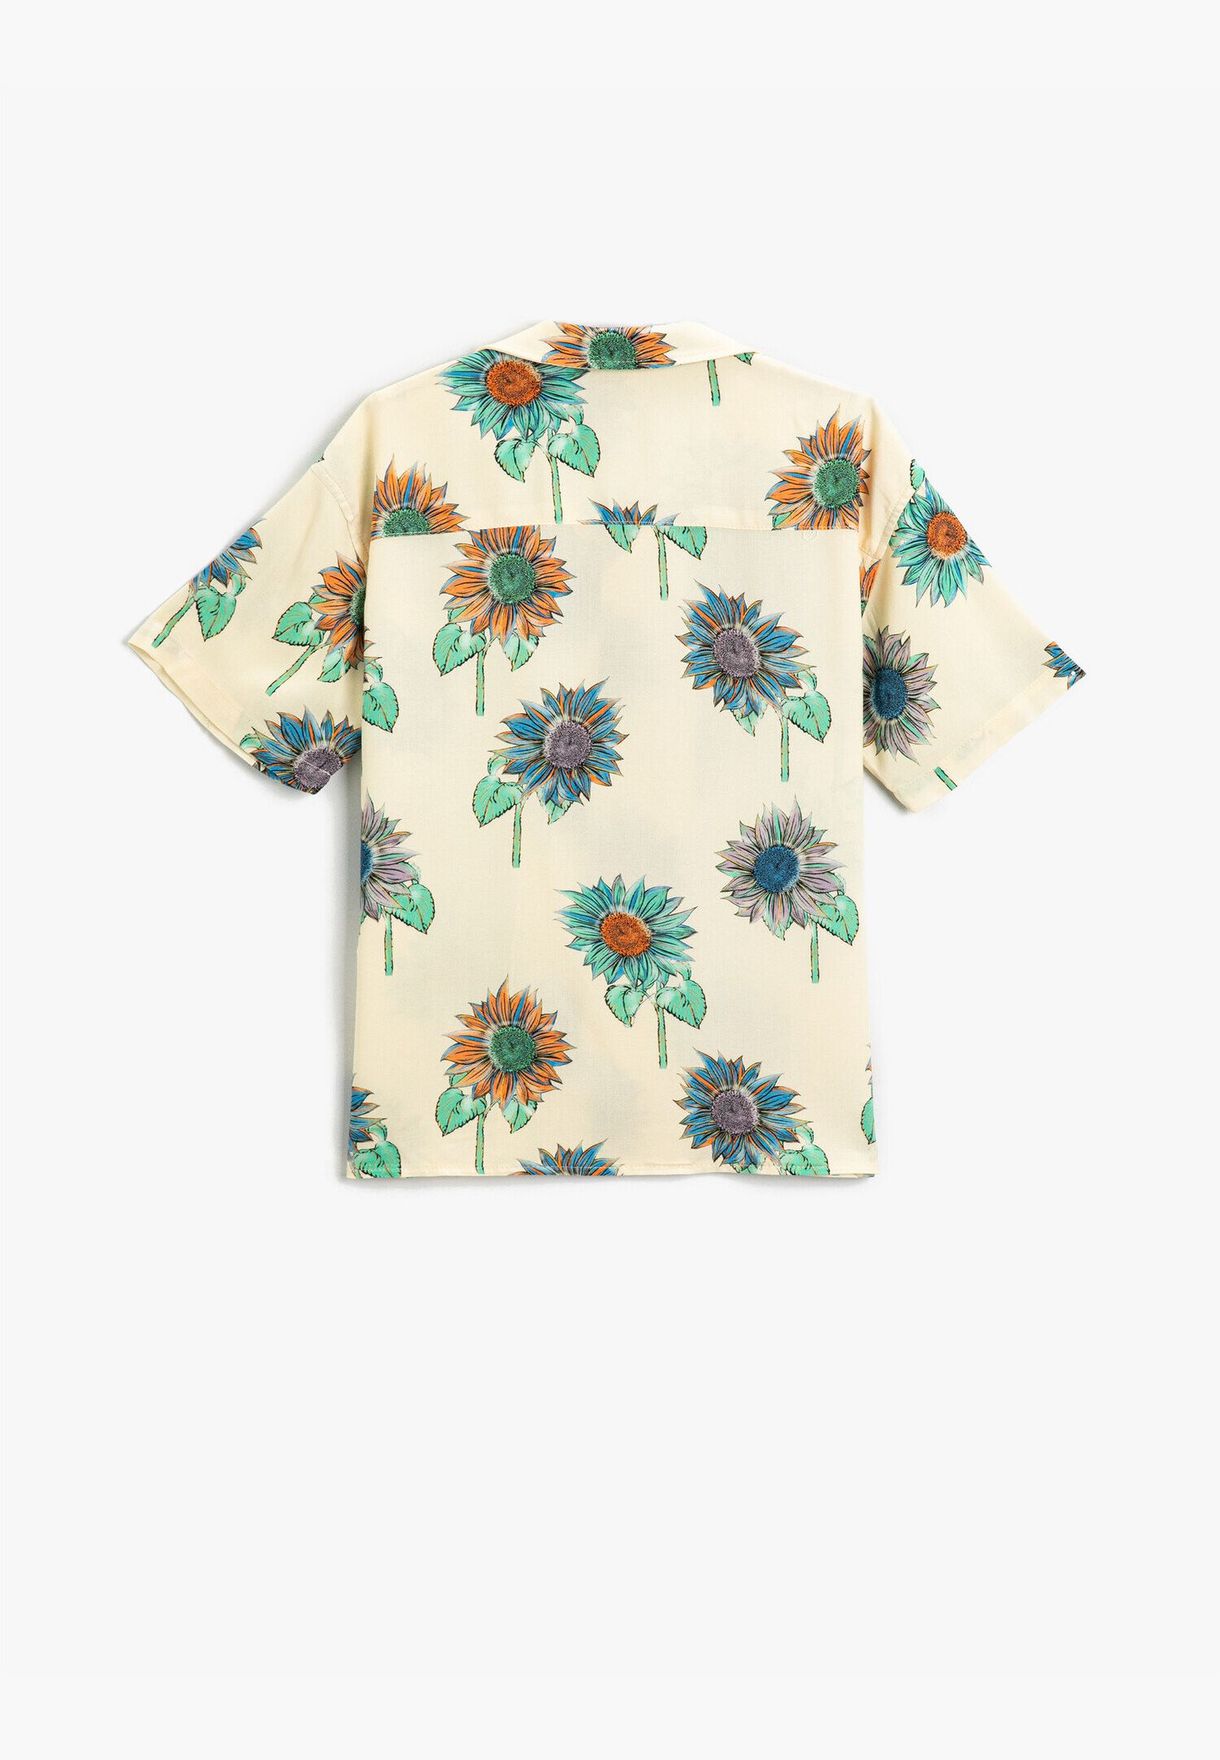 Sunflower Patterned Shirt Short Sleeve